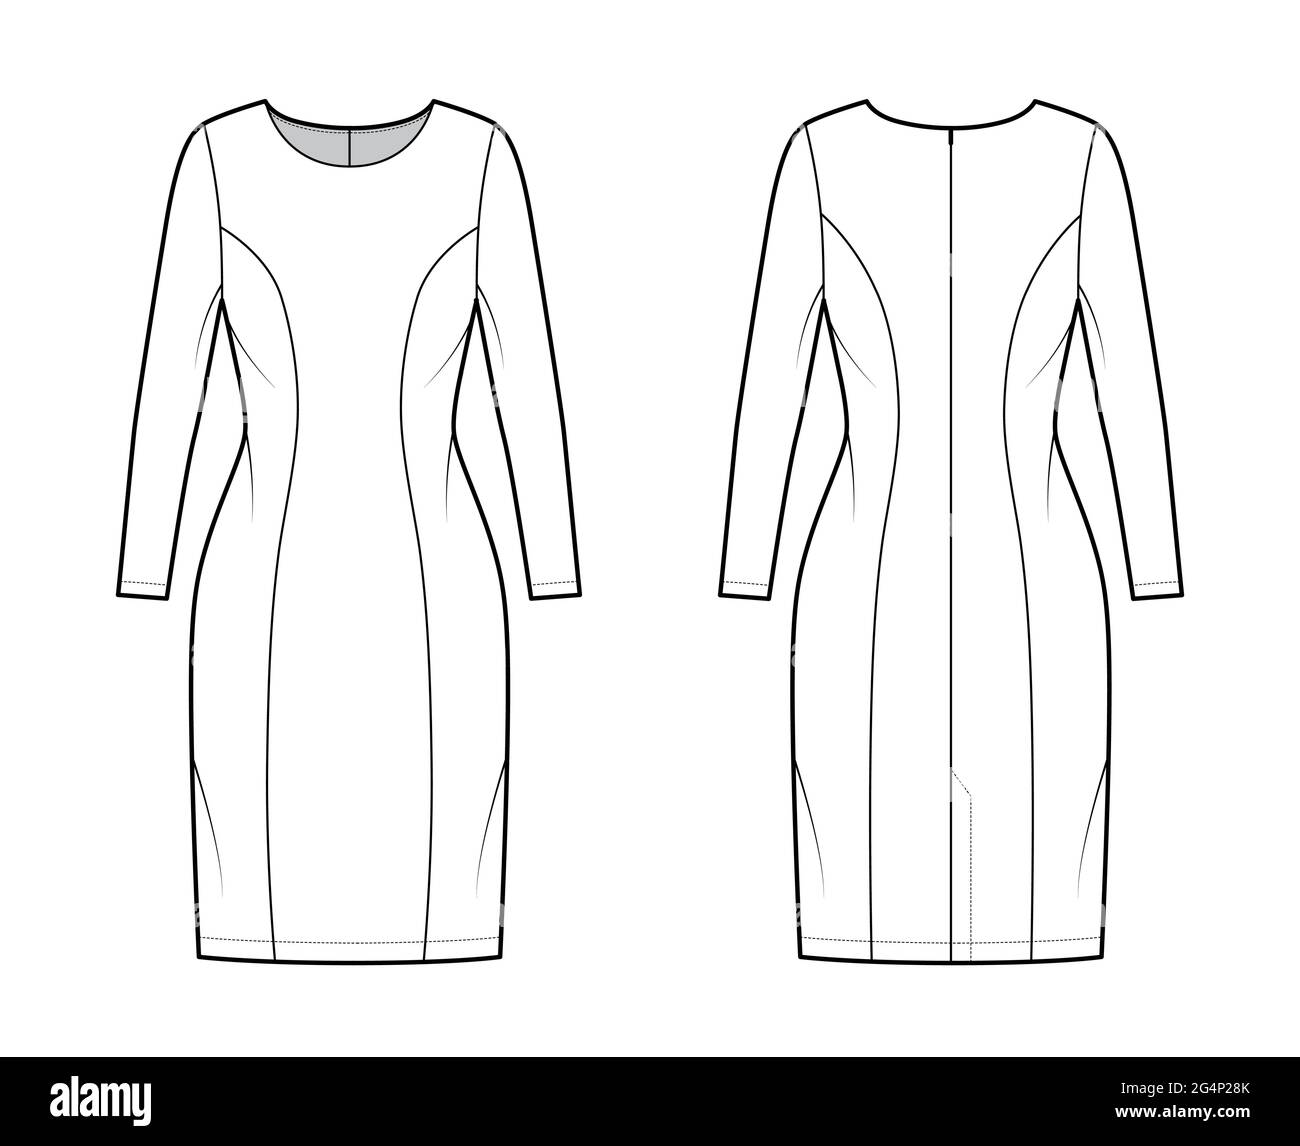 Dress princess line technical fashion illustration with long sleeve ...